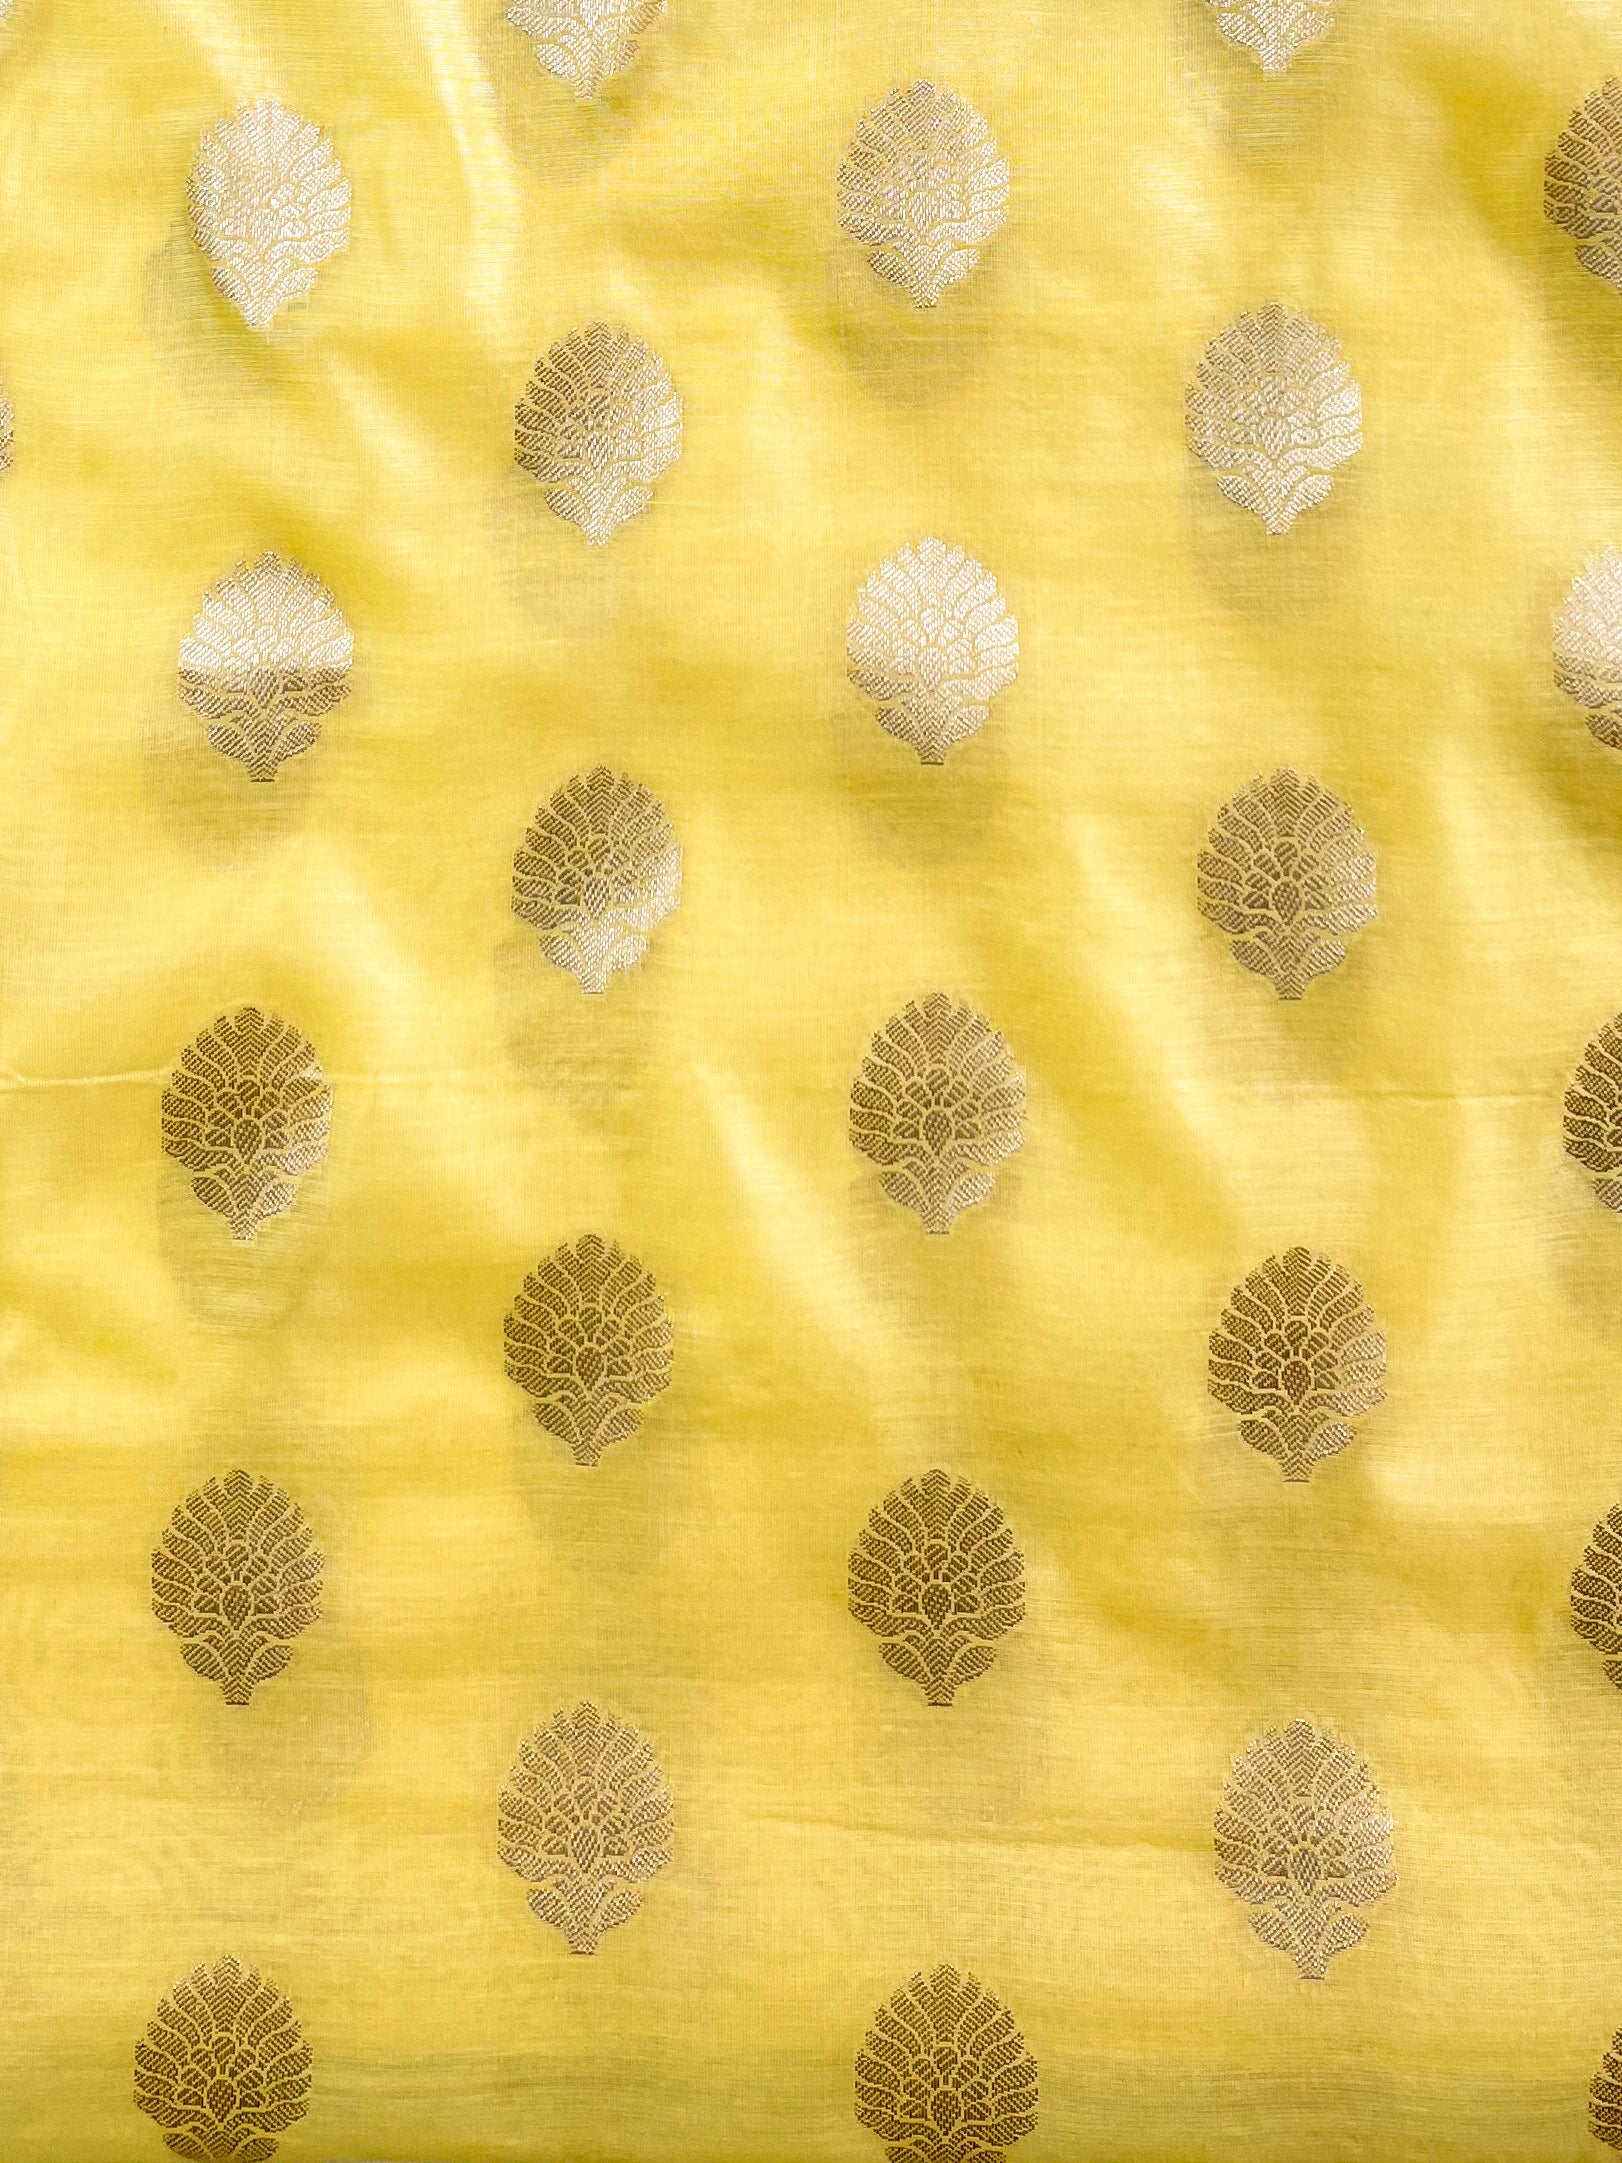 Banarasee Chanderi Cotton Buta Design Salwar Kameez Fabric With Contrast Dupatta-Yellow &  Pink